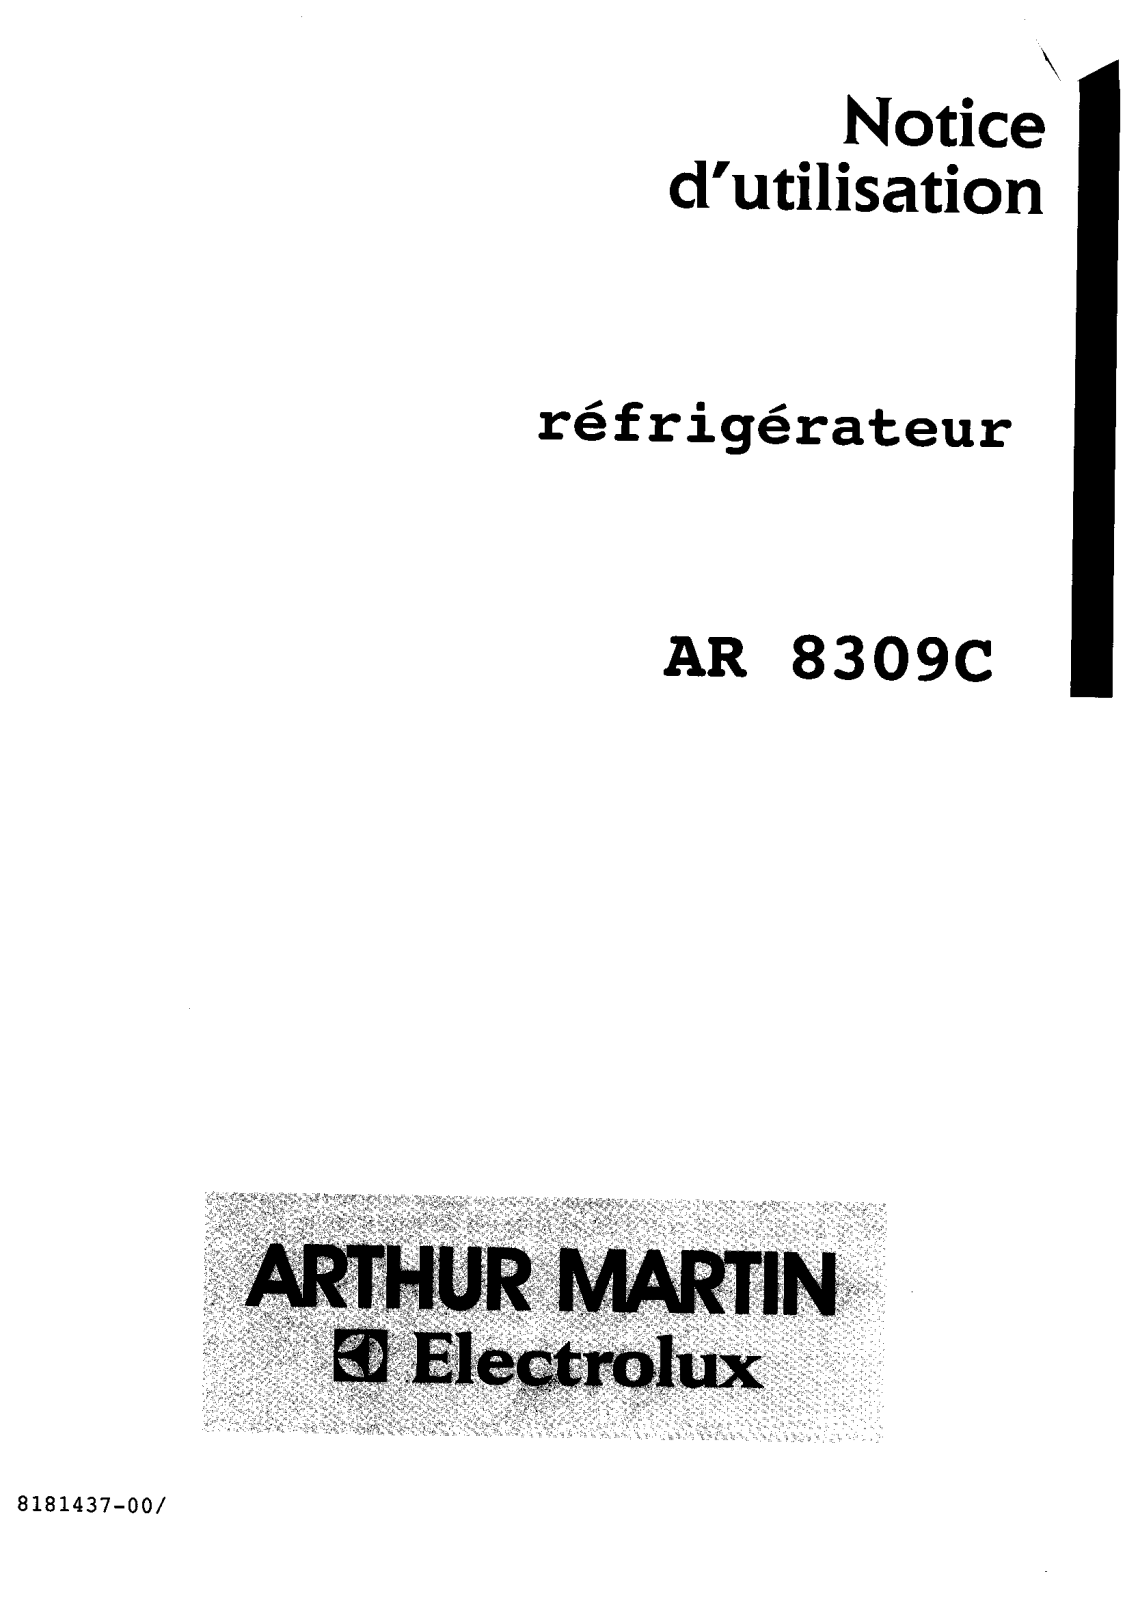 Arthur martin AR8309C User Manual